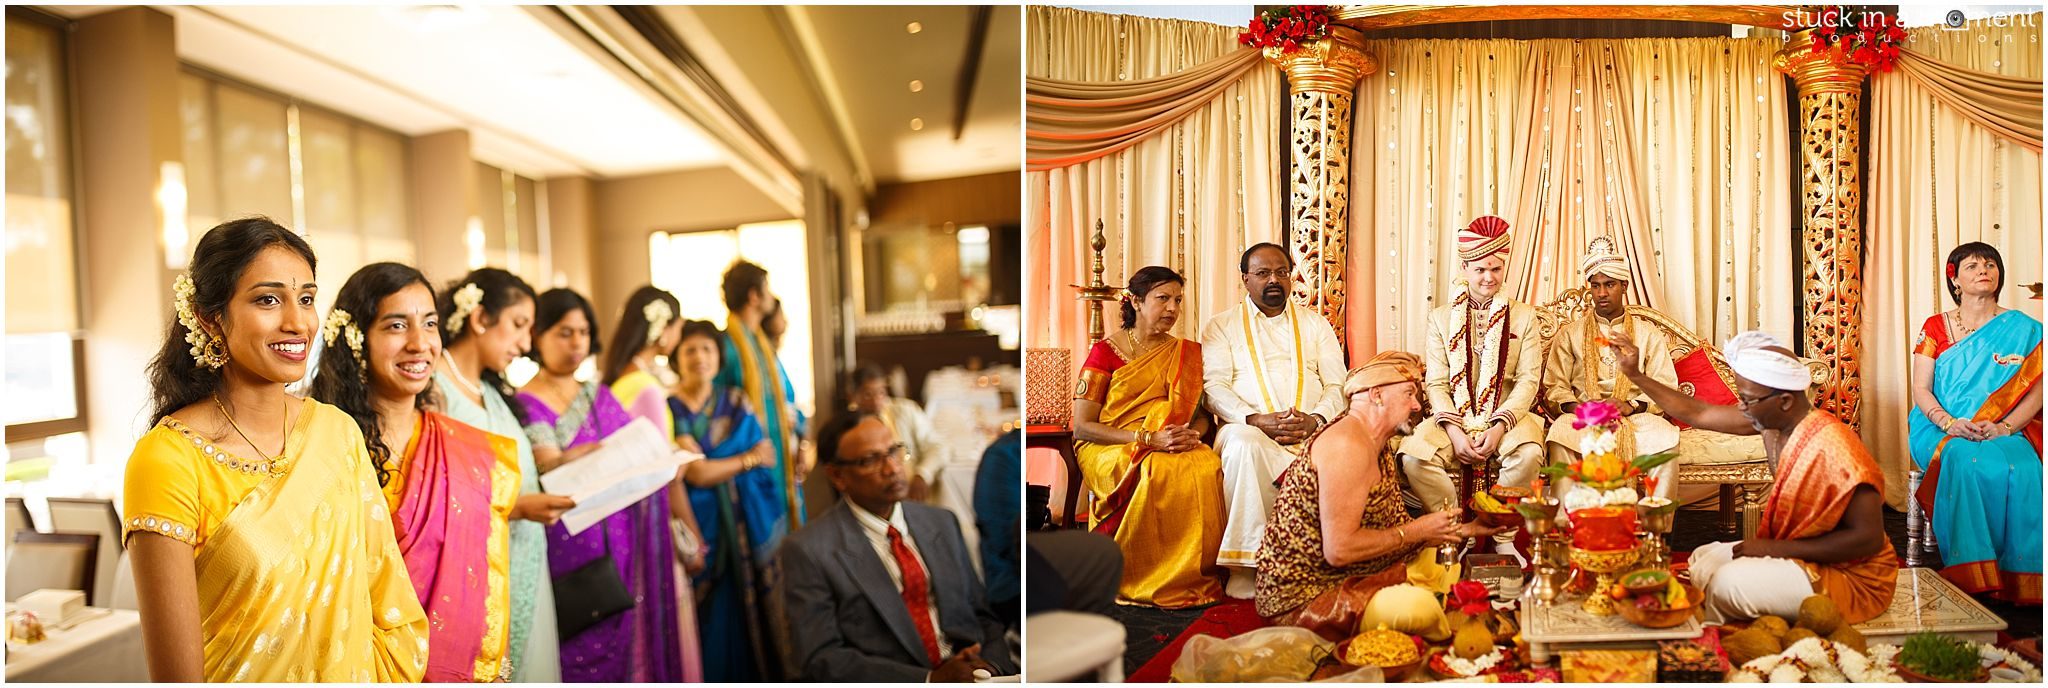 srilankan wedding photographer sydney